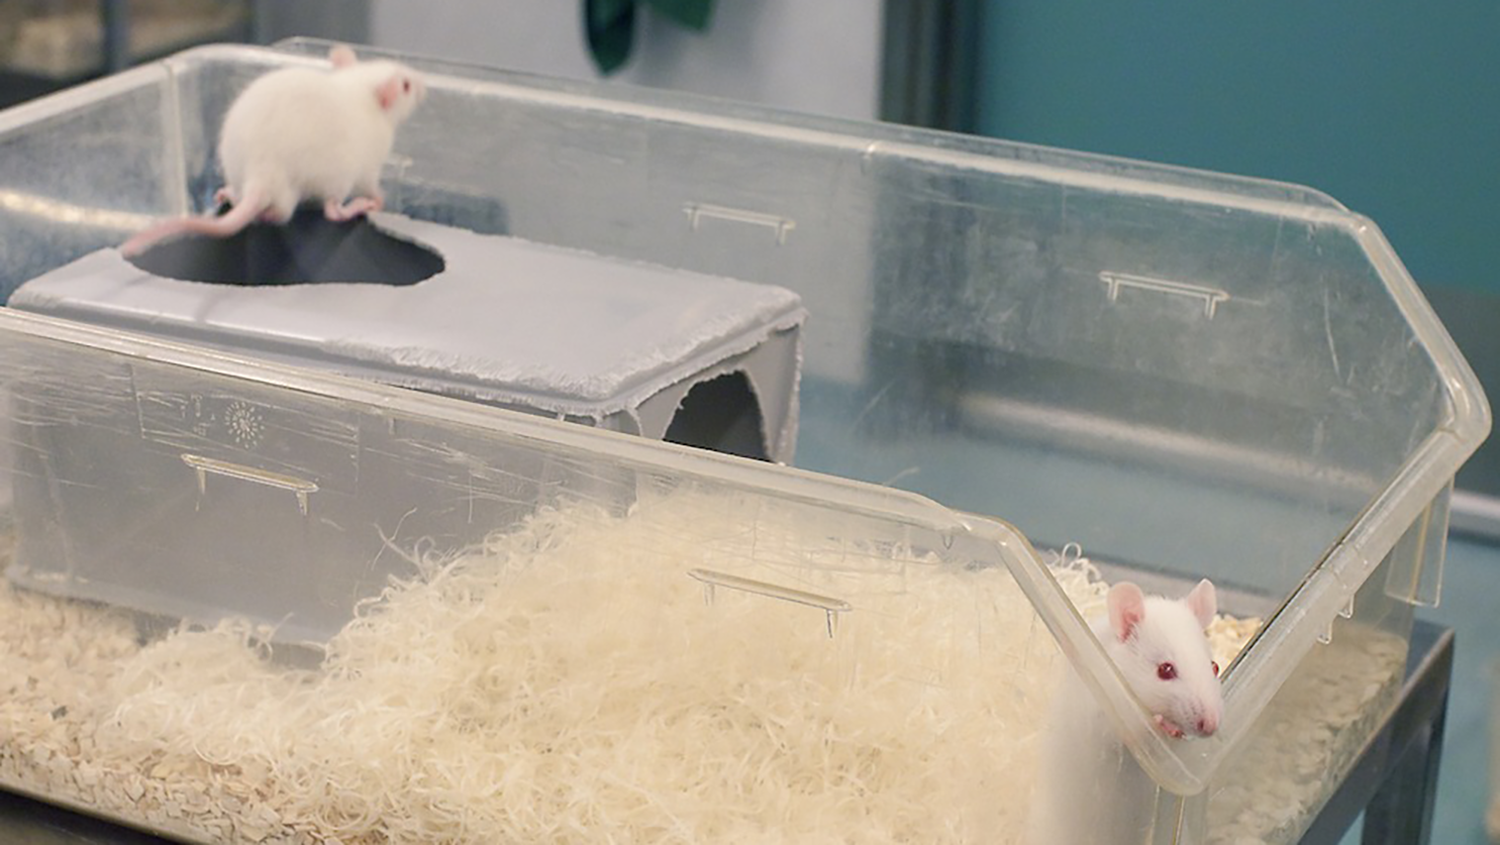 Två vita råttor i en genomskinlig plastback utan tak